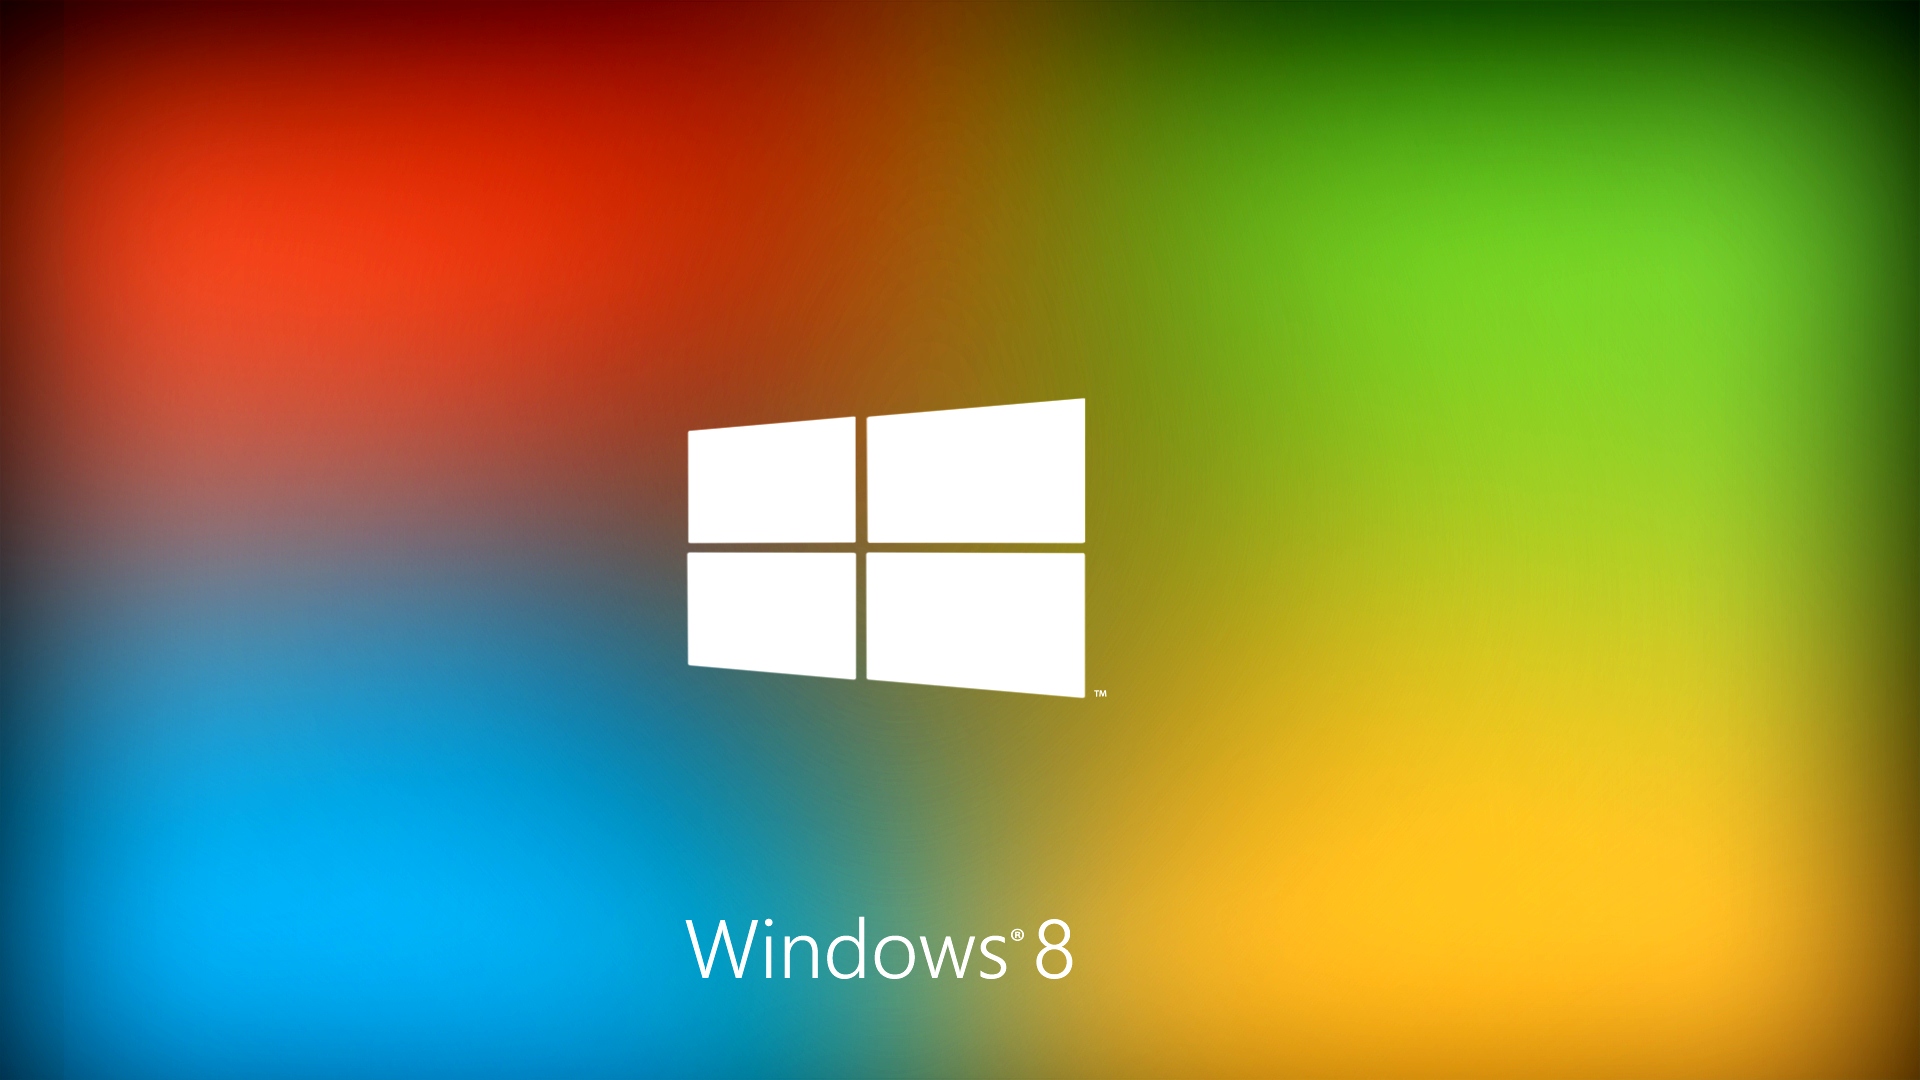 Hd Windows 8 Wallpapers Group - Windows 8 Wallpaper Hd - HD Wallpaper 